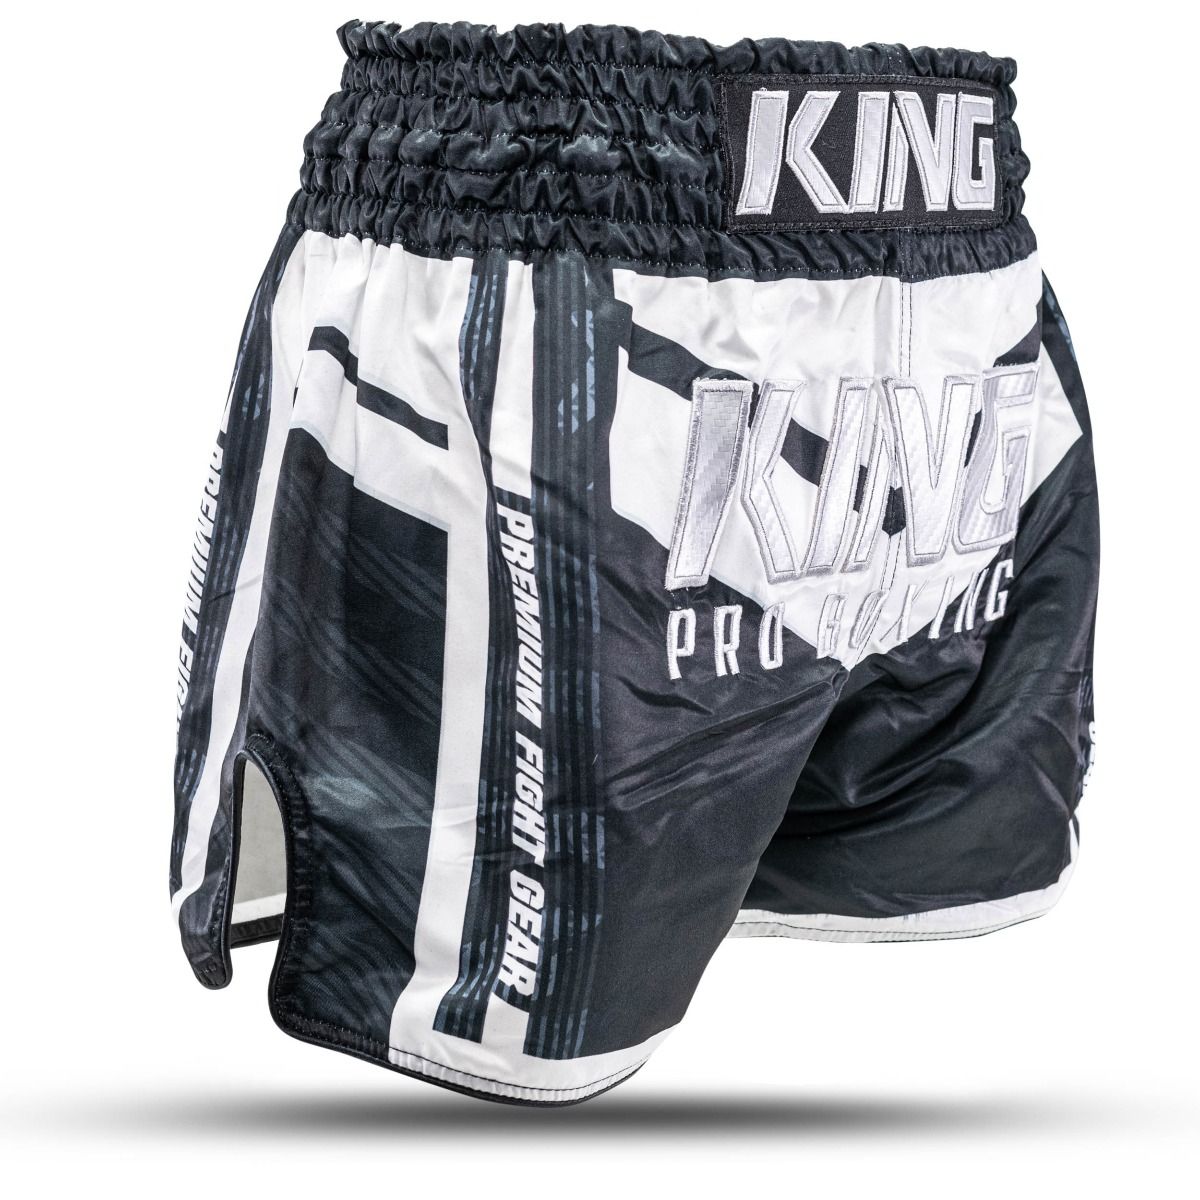 King Pro Boxing-Fightshort-Kickboksbroek-Short-ENDURANCE 4-Zwart-Grijs-Wit